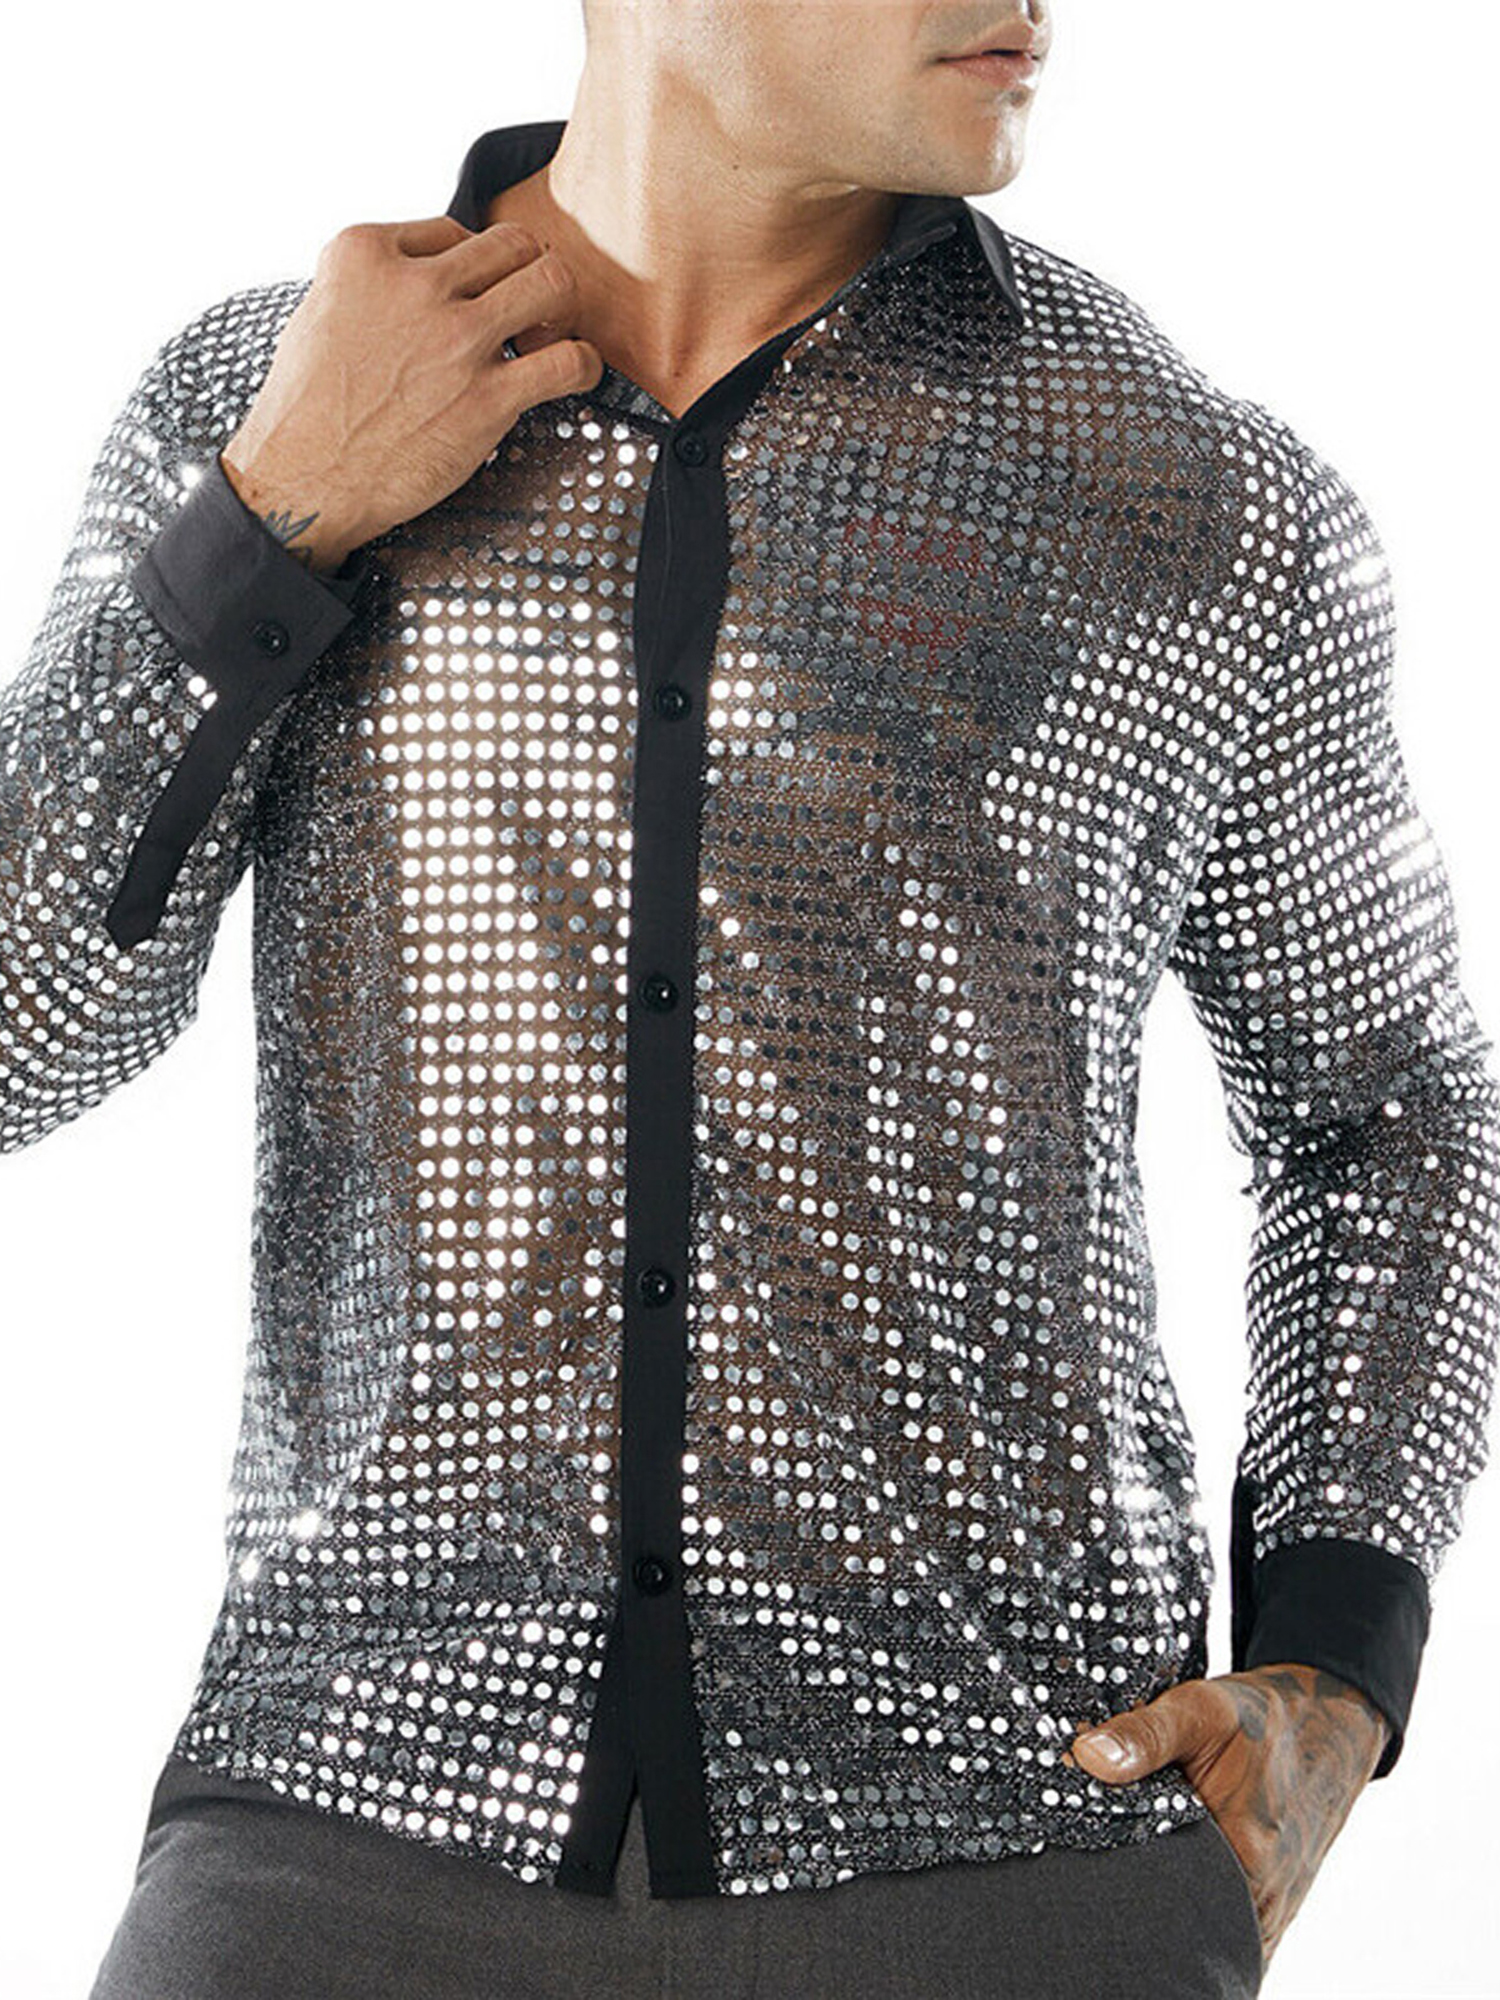 TFFR Men Sequins Shirts Translucent Tops Long Sleeve Button Down Shirt ...